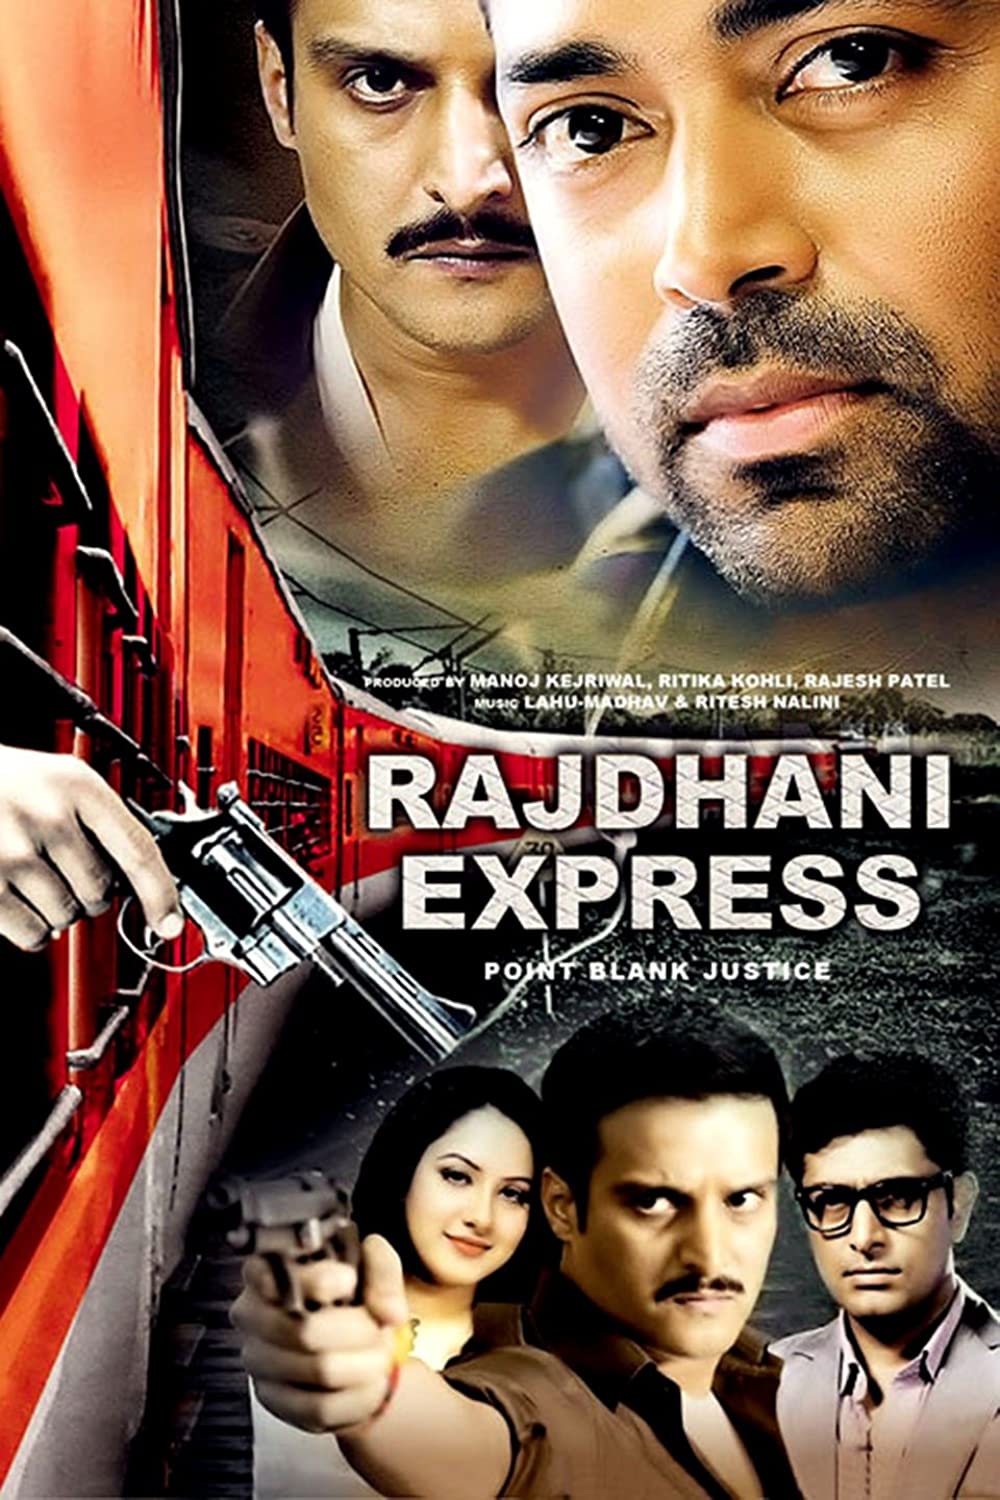 Download Rajdhani Express 2013 Hindi Movie 480p HDRip 400MB